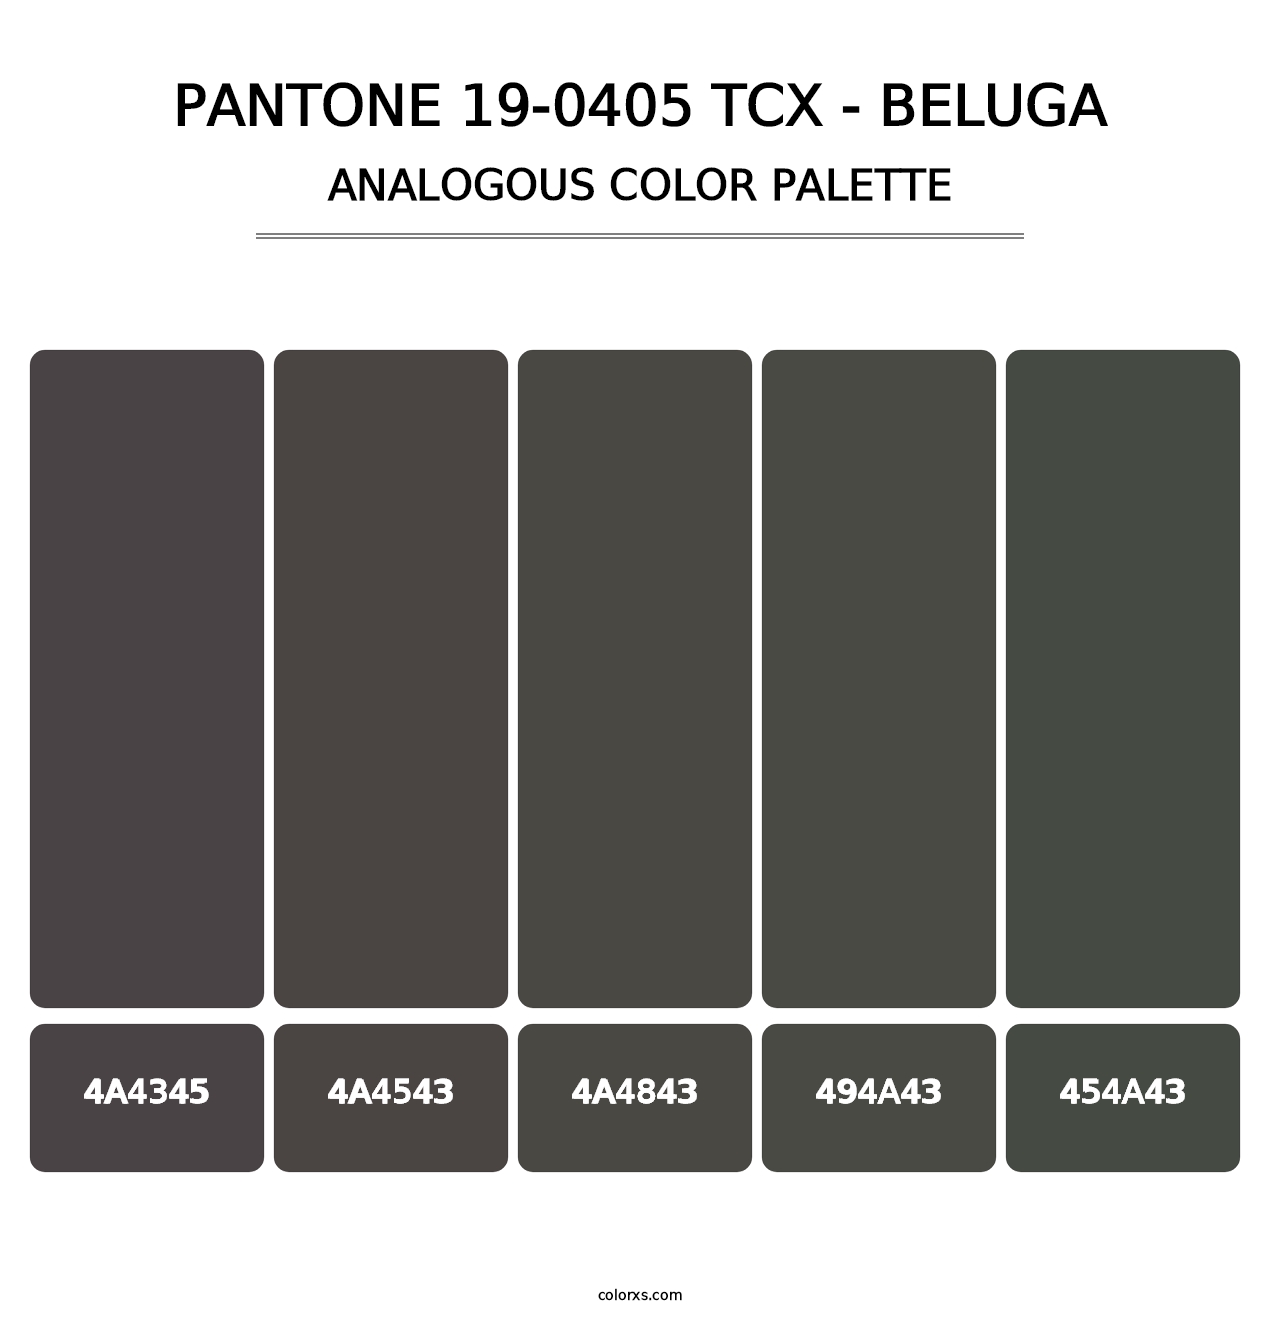 PANTONE 19-0405 TCX - Beluga - Analogous Color Palette